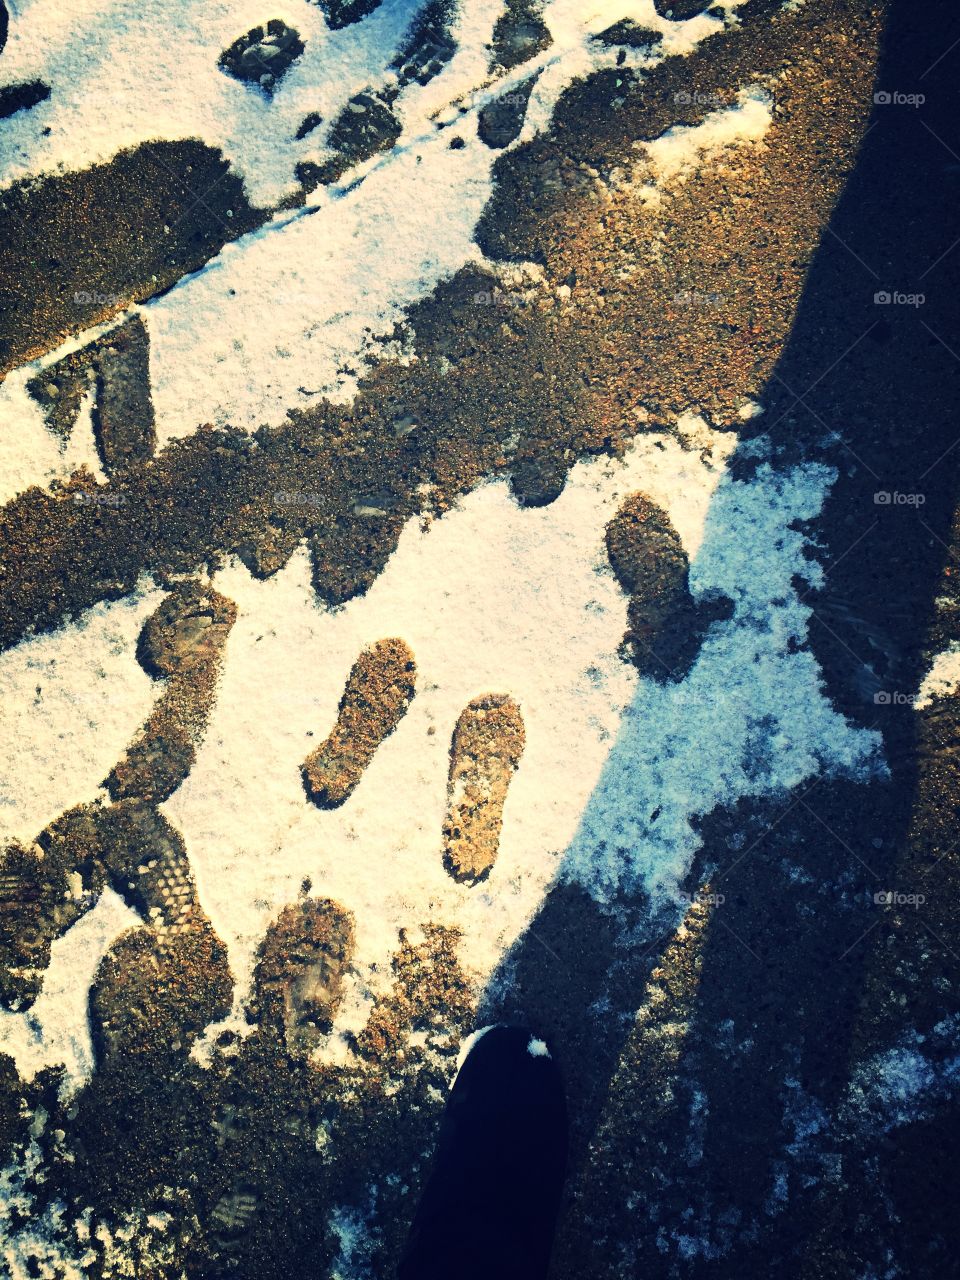 Footprints of winter fading